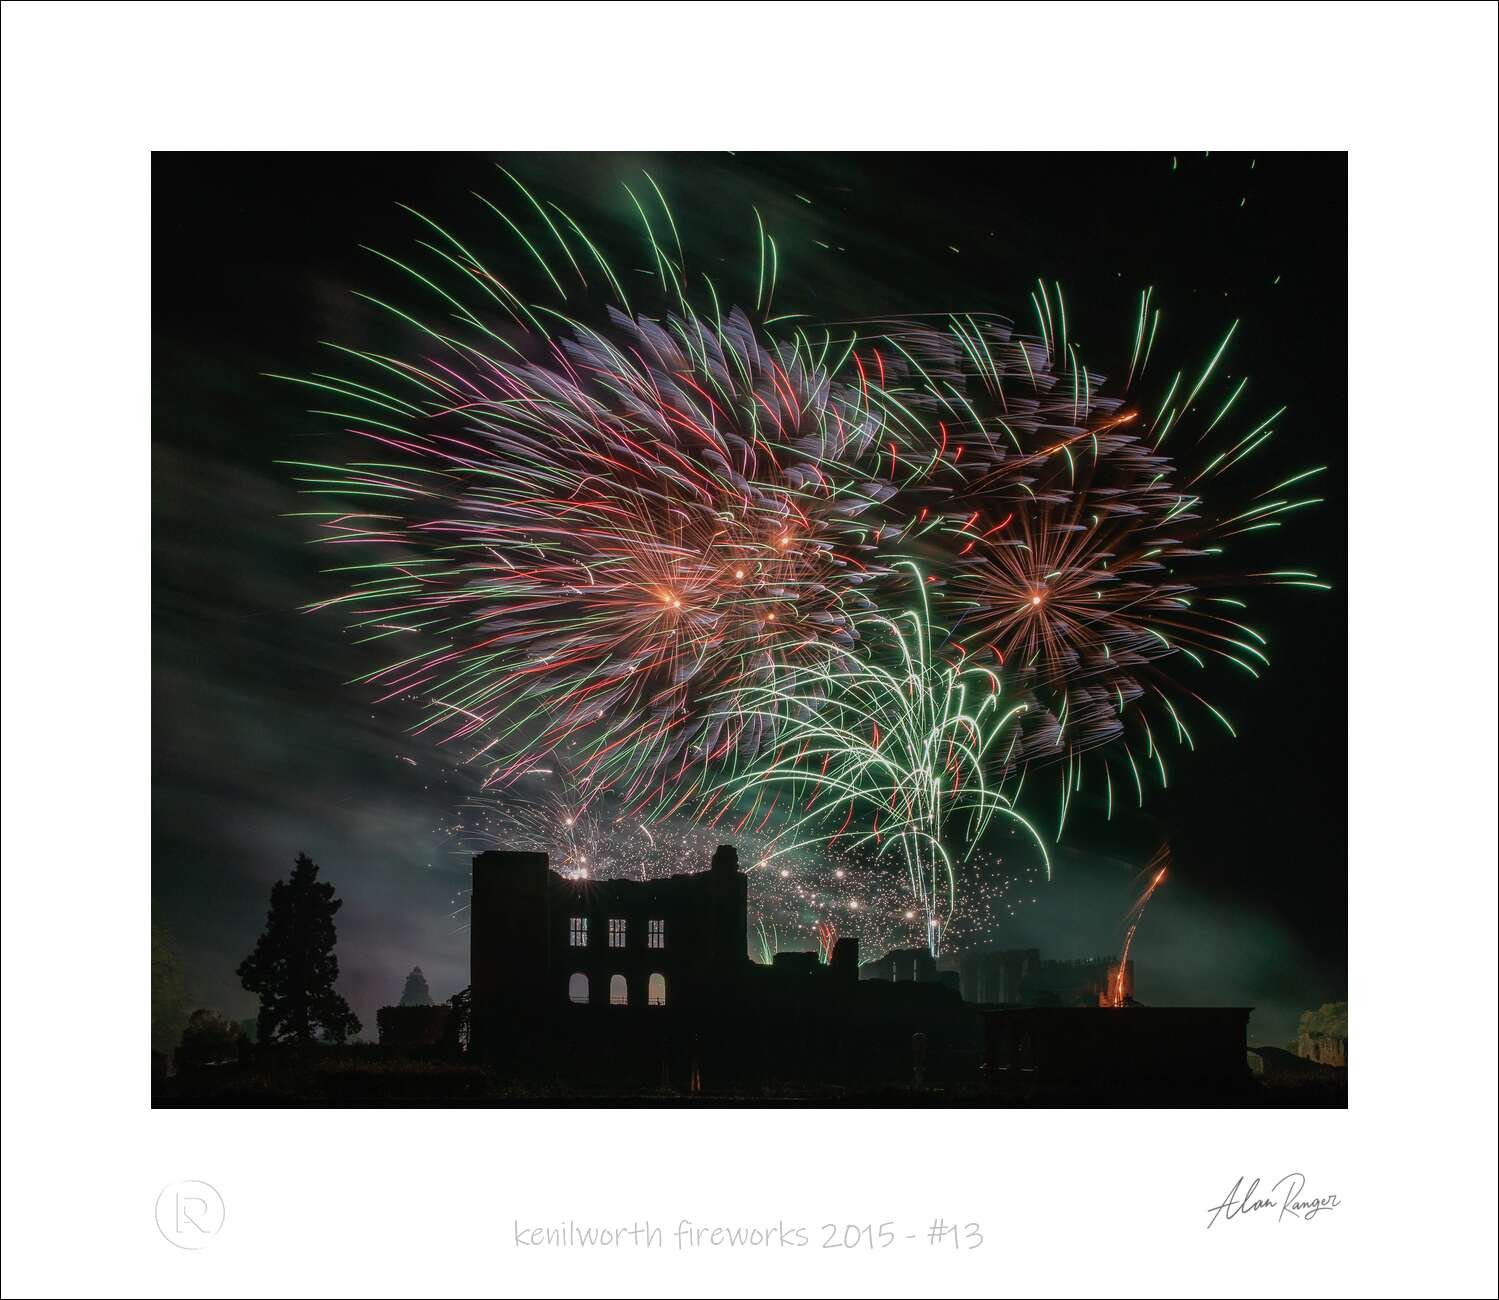 kenilworth fireworks 2015 - #13.jpg